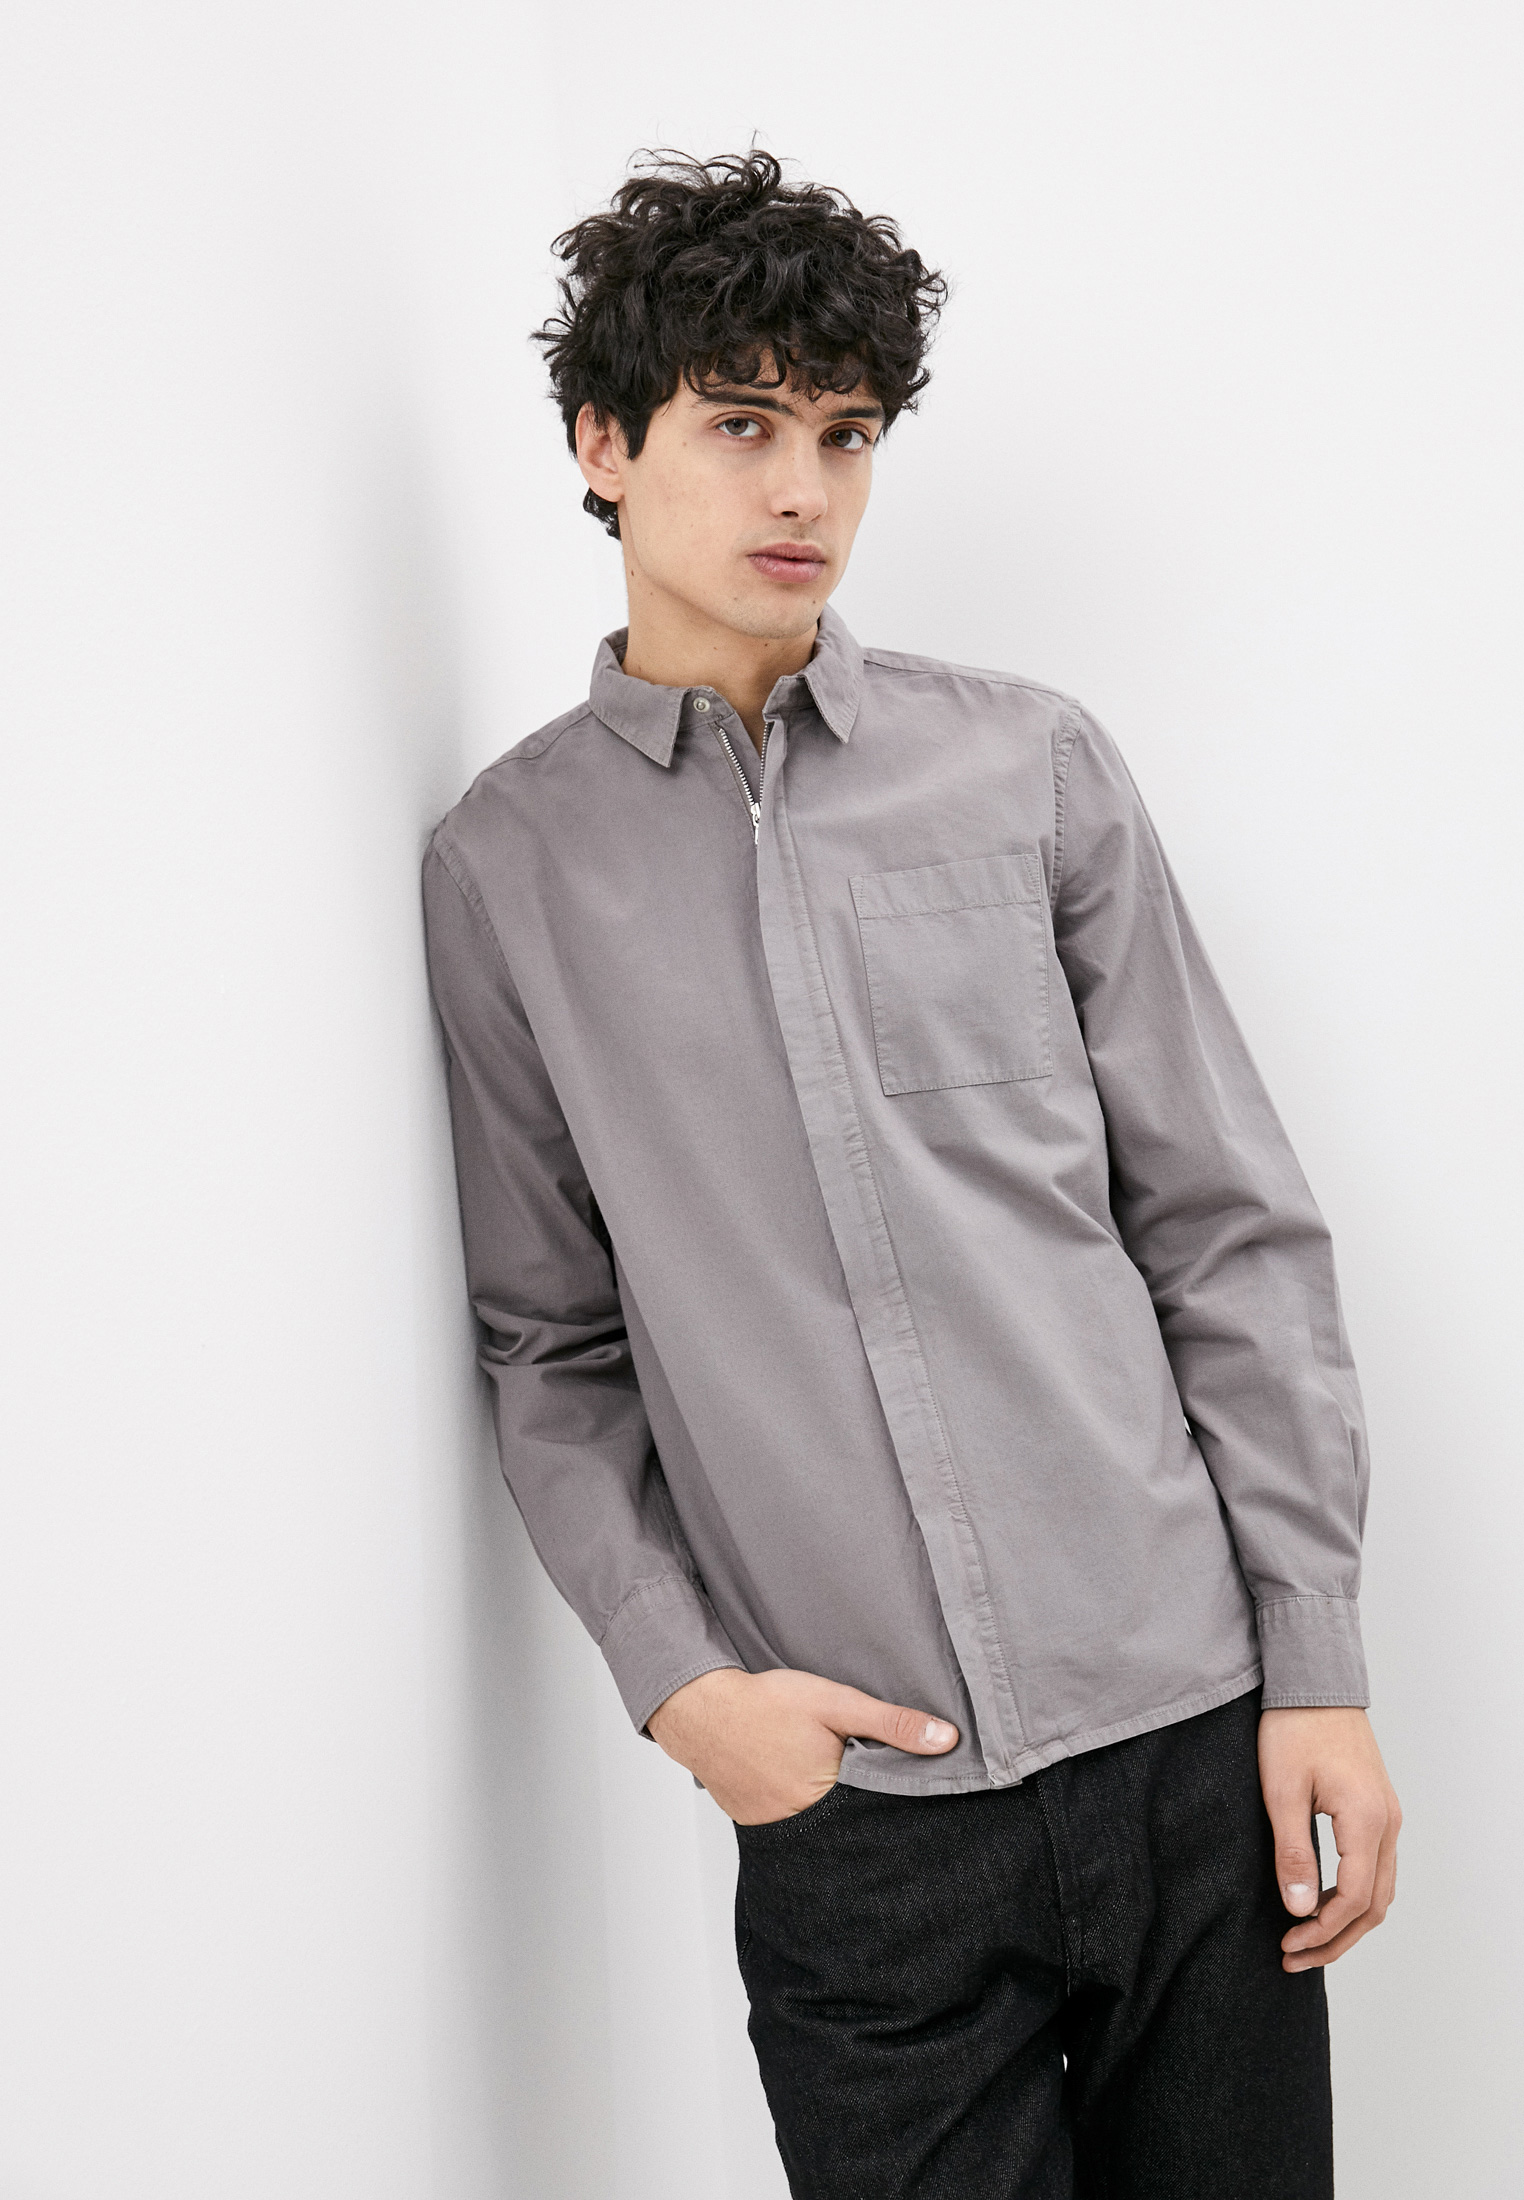 Рубашка French Connection, цвет: серый, RTLAAX060101 — купить в интернет-магазине Lamoda